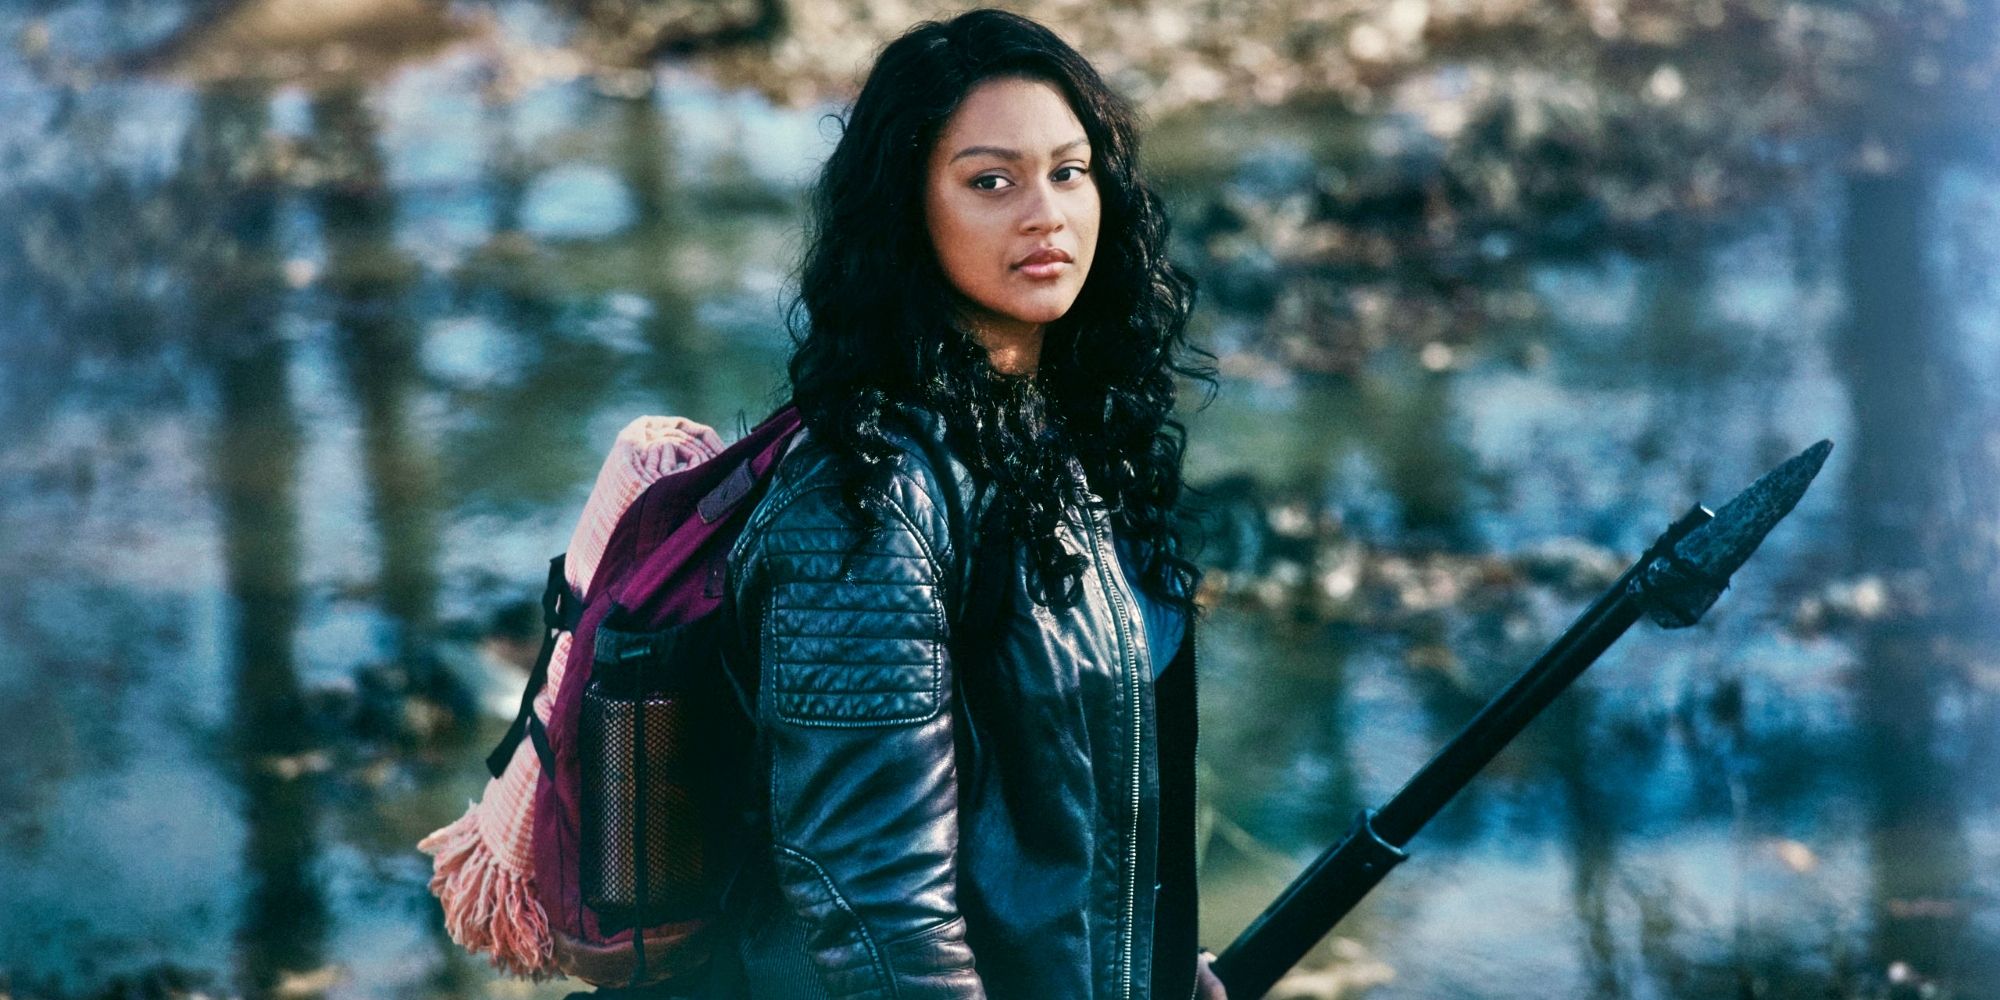 Aliyah Royale as Iris Bennett holding a spear in The Walking Dead: World Beyond